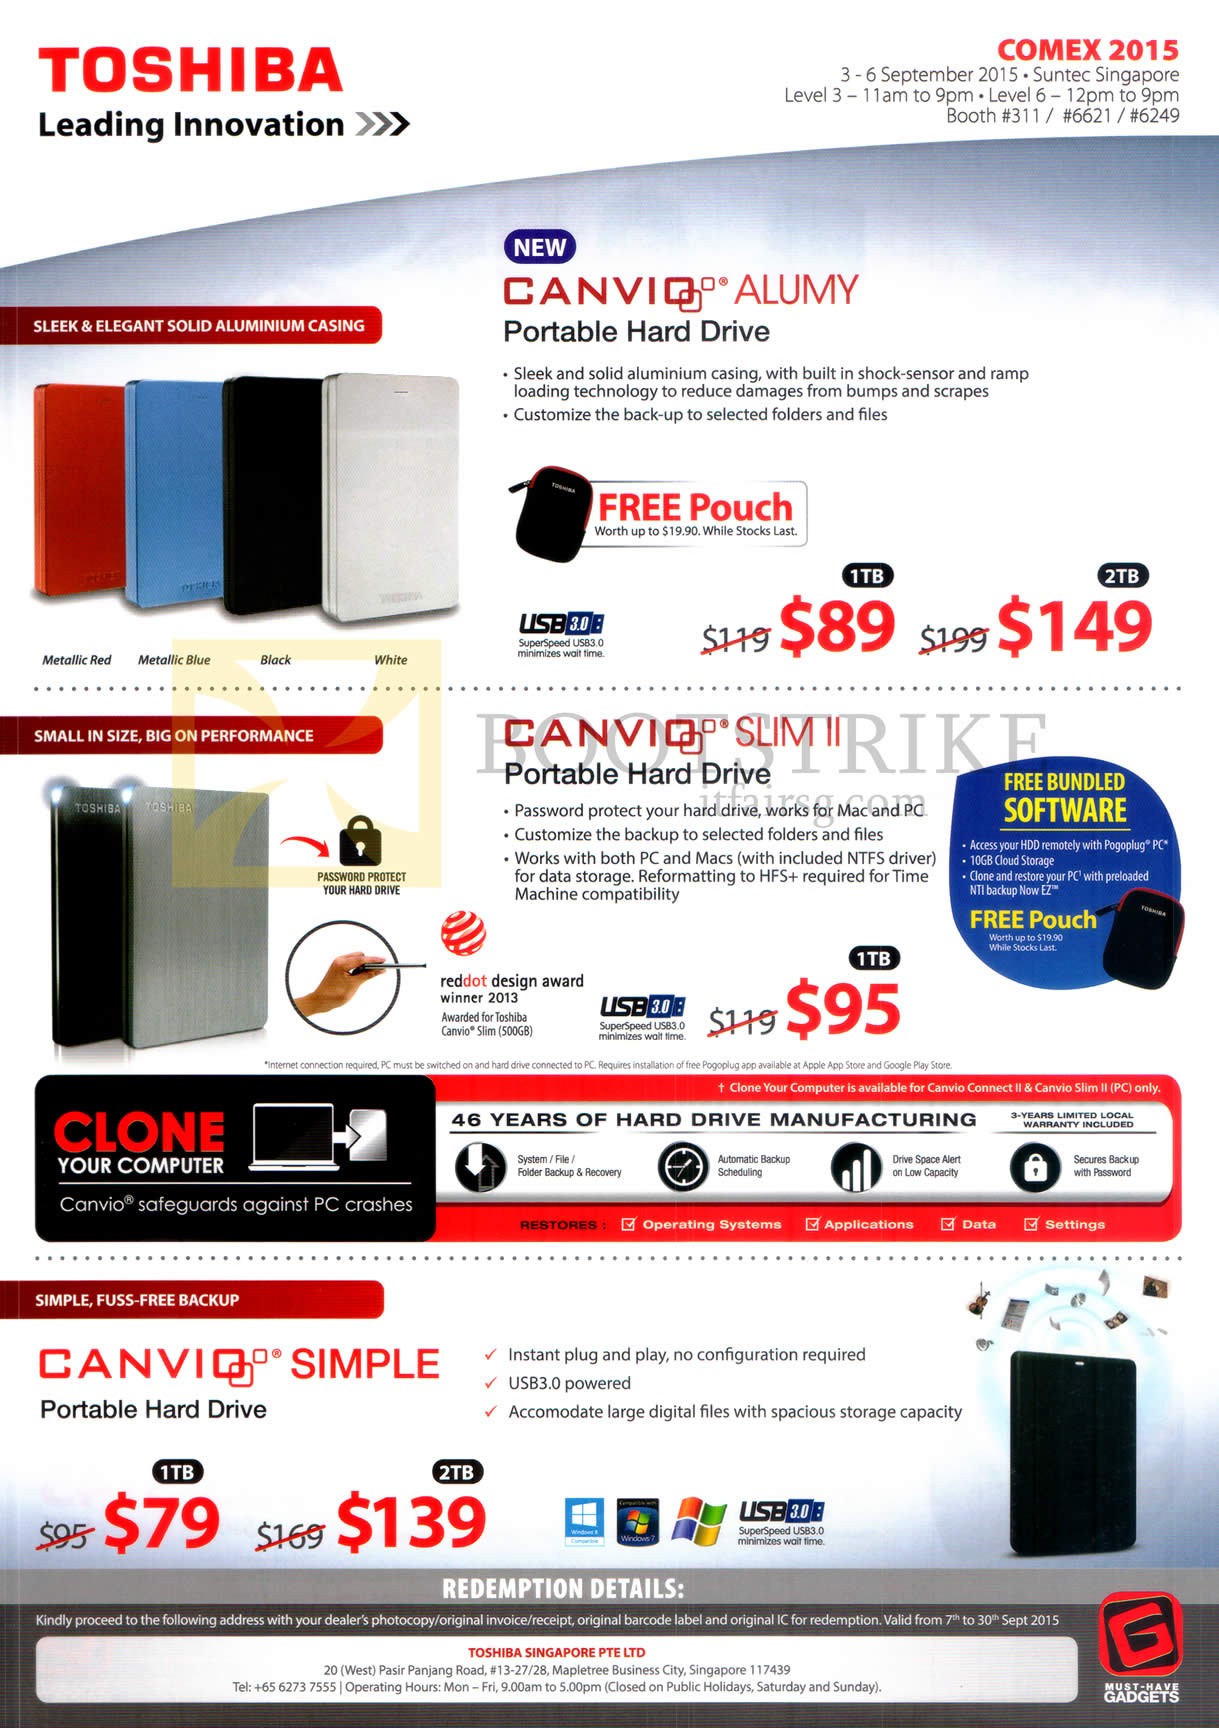 COMEX 2015 price list image brochure of Toshiba External Storage Drive Canvio Alumy, Canvio Slim II, Canvio Simple, 1TB 2TB